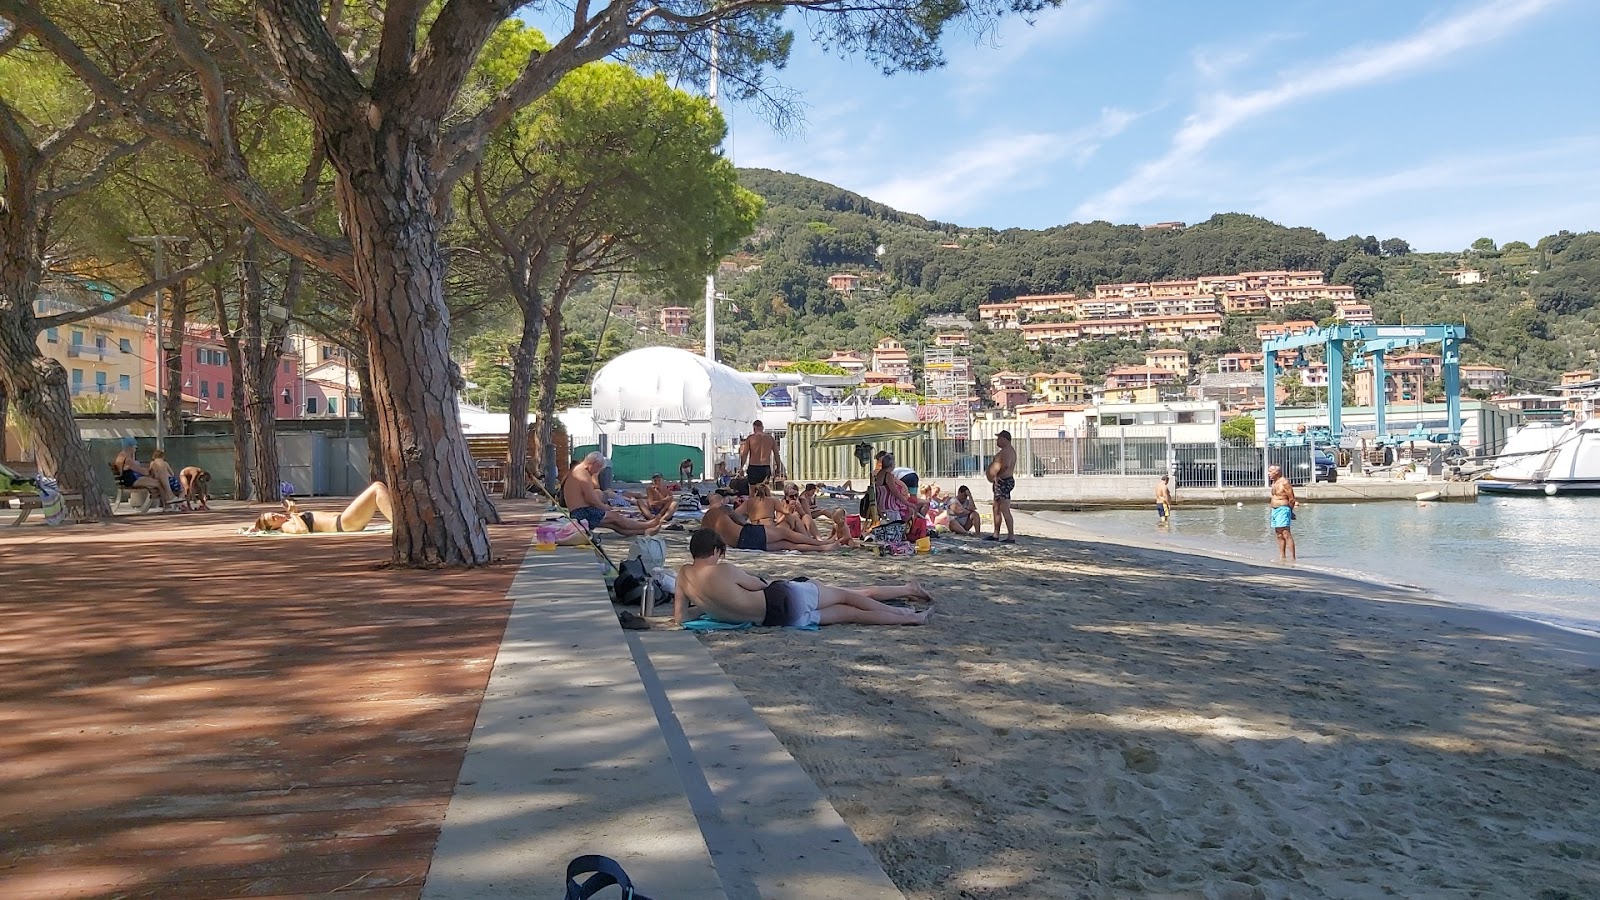 Foto de Spiaggia Giardini Pubblici com alto nível de limpeza